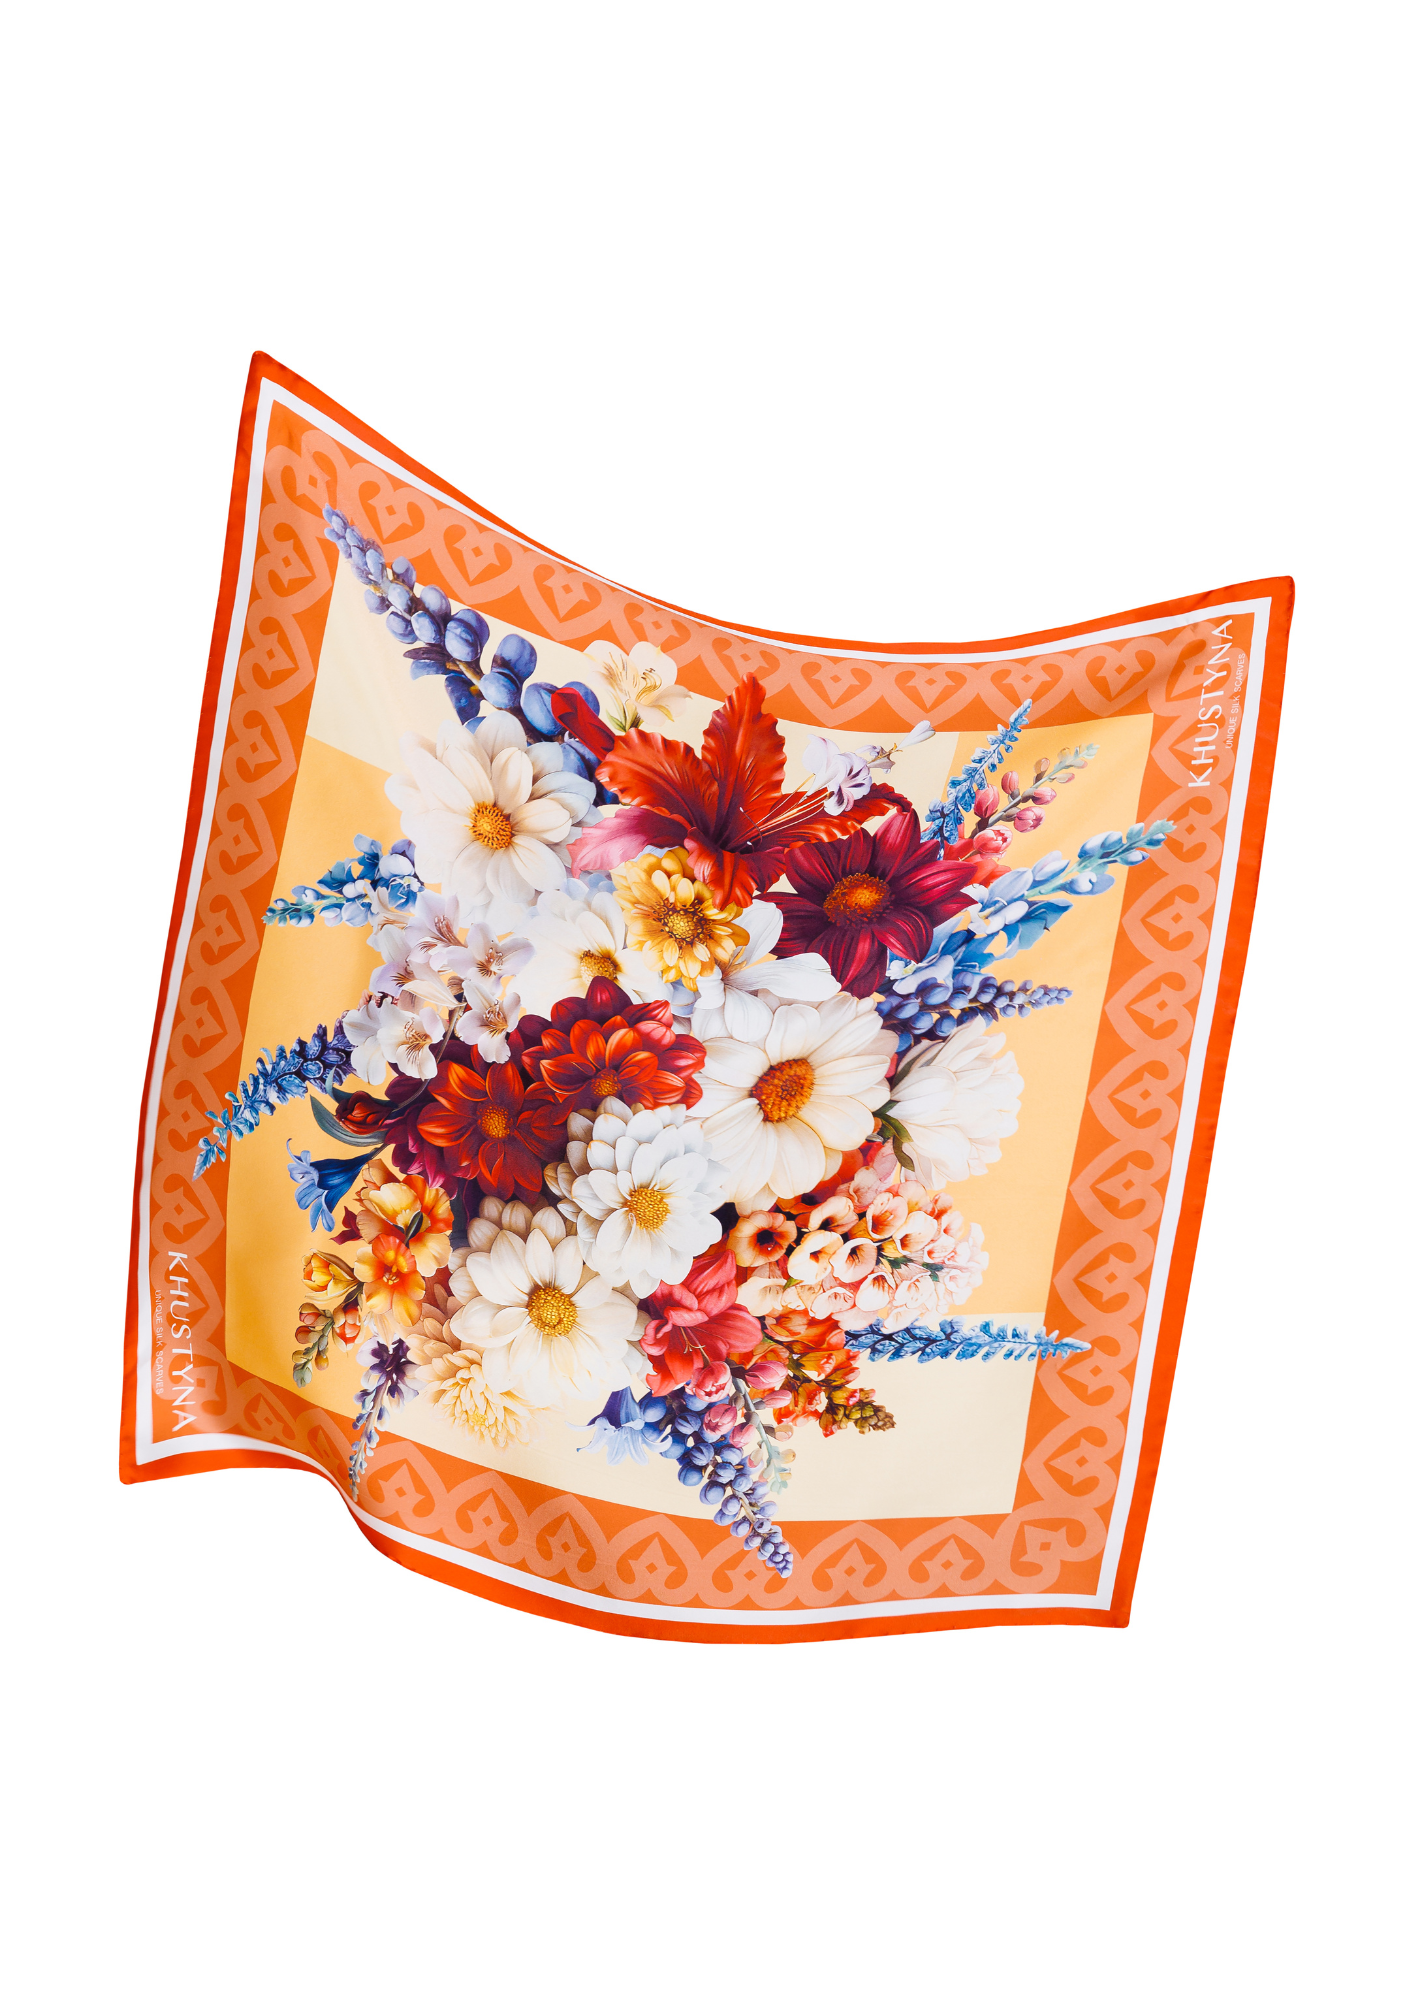 Silk scarf - Ukrainian fluttering